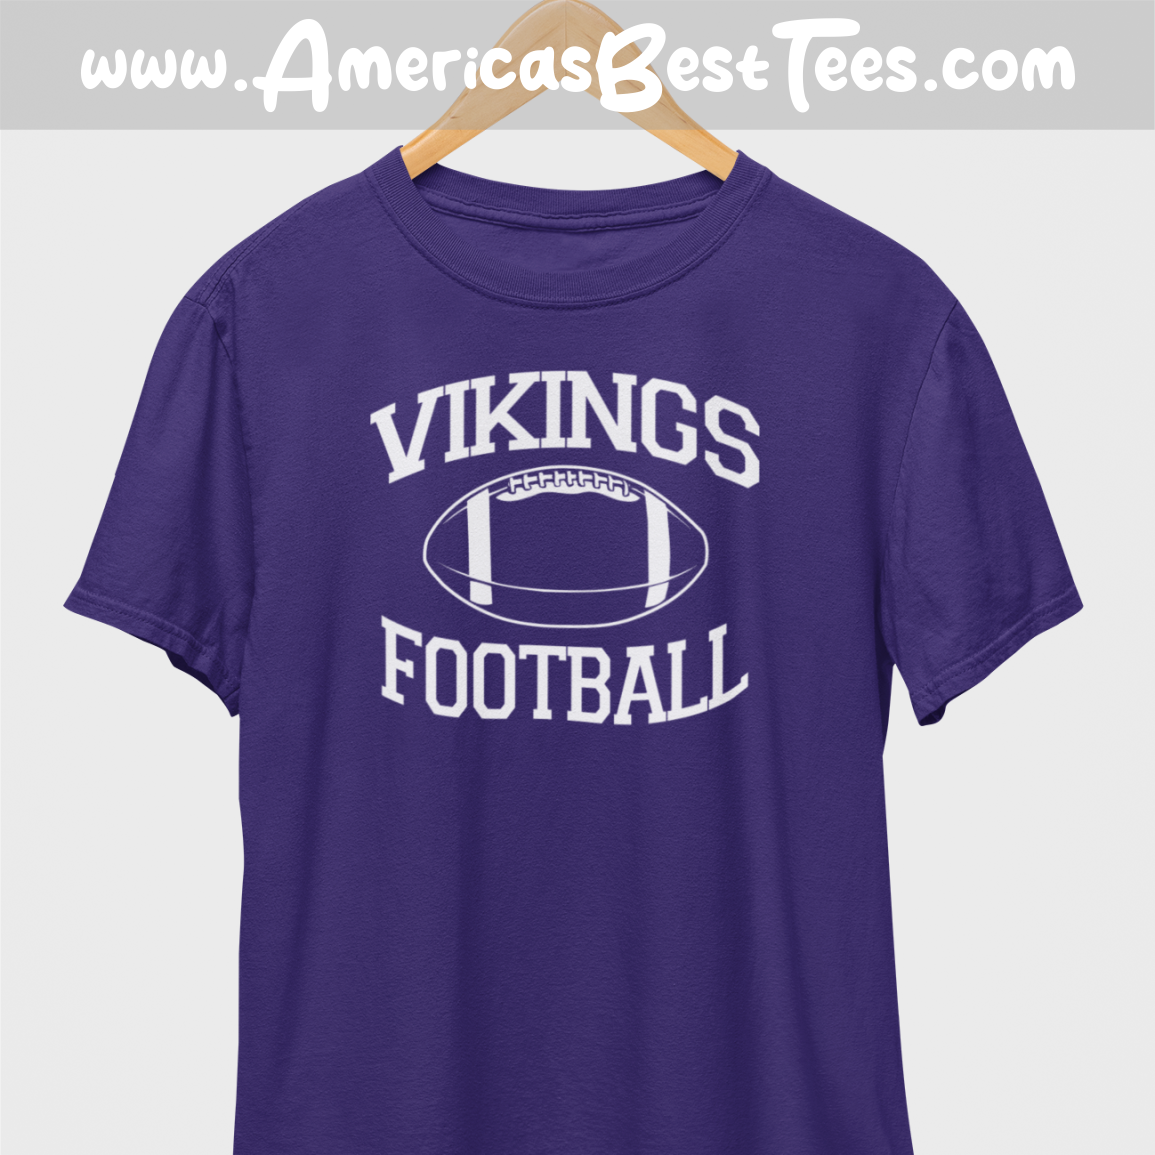 Vikings Football White Print T-Shirt